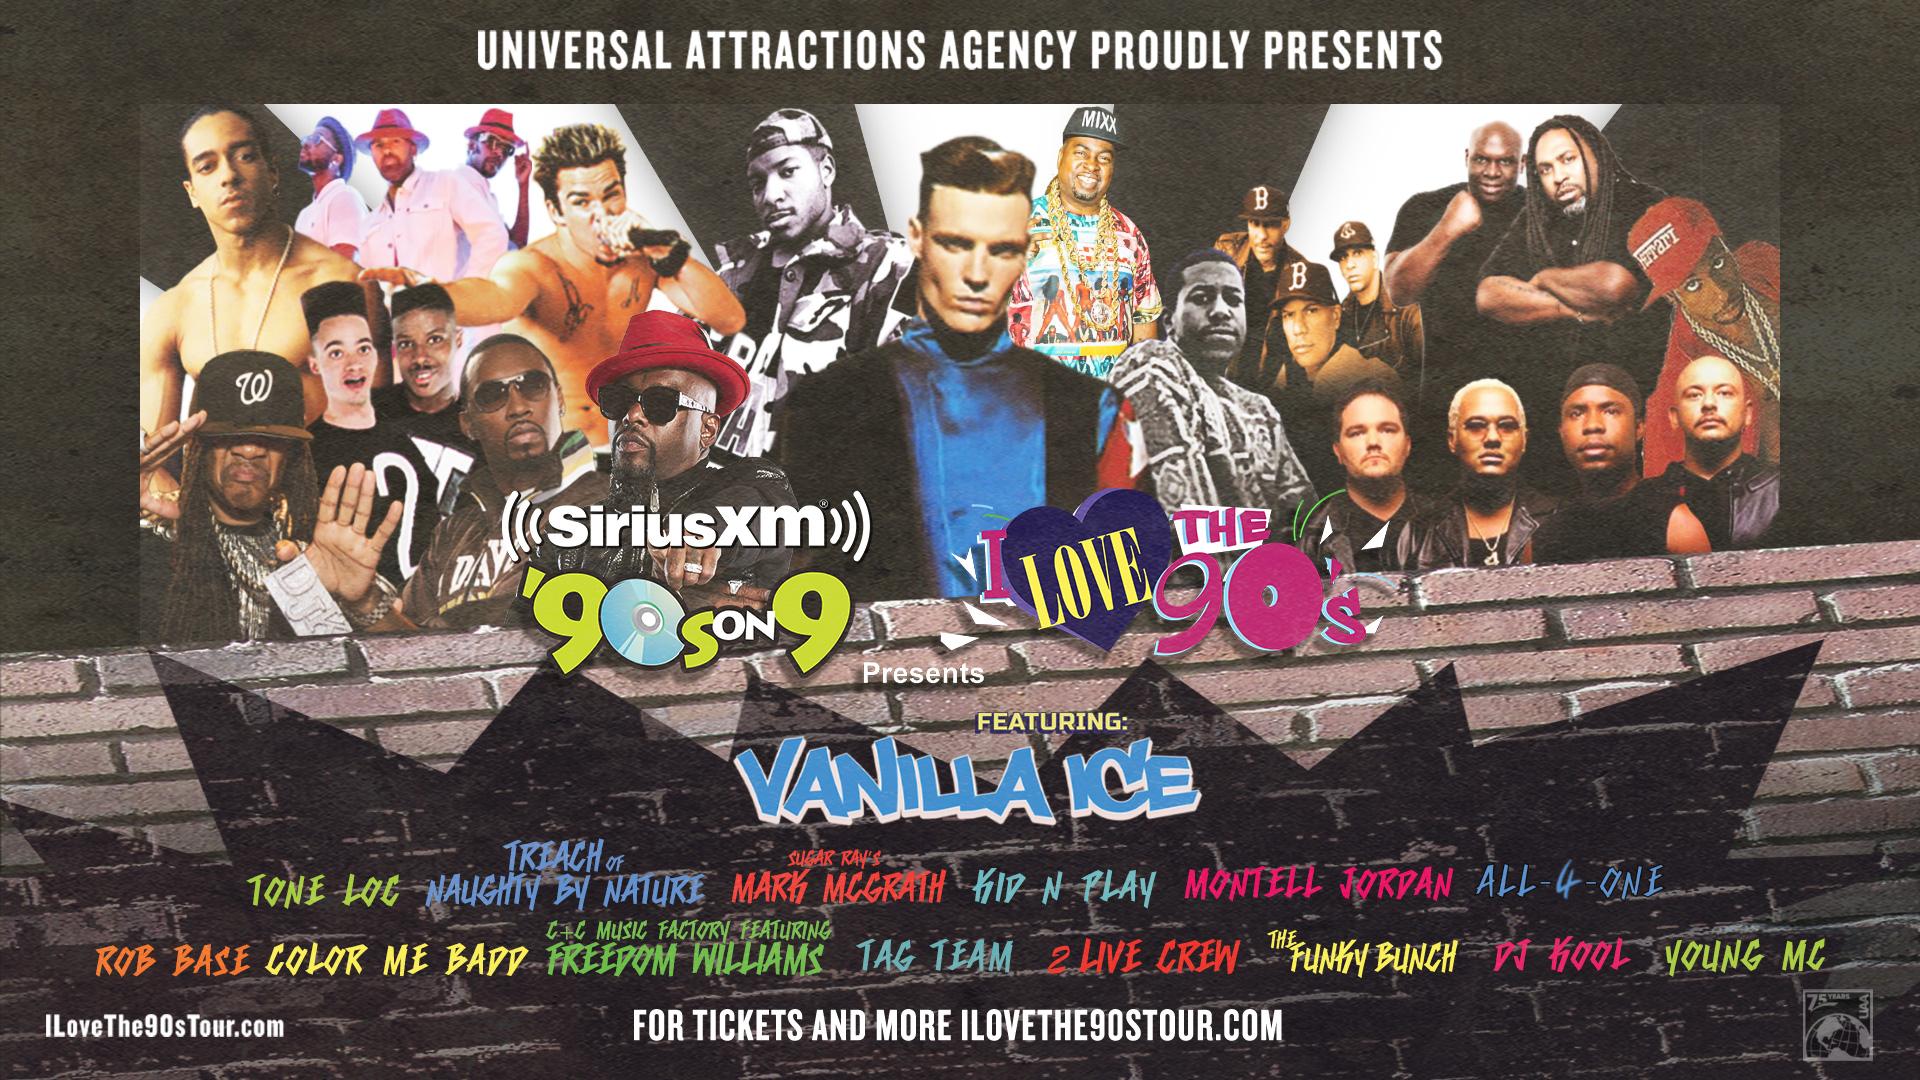 I Love The 90s Tour, SiriusXM Presents, Vanilla Ice, 90s on 9, Rob Base, Tone Loc, Young MC, C&C Music Factory 